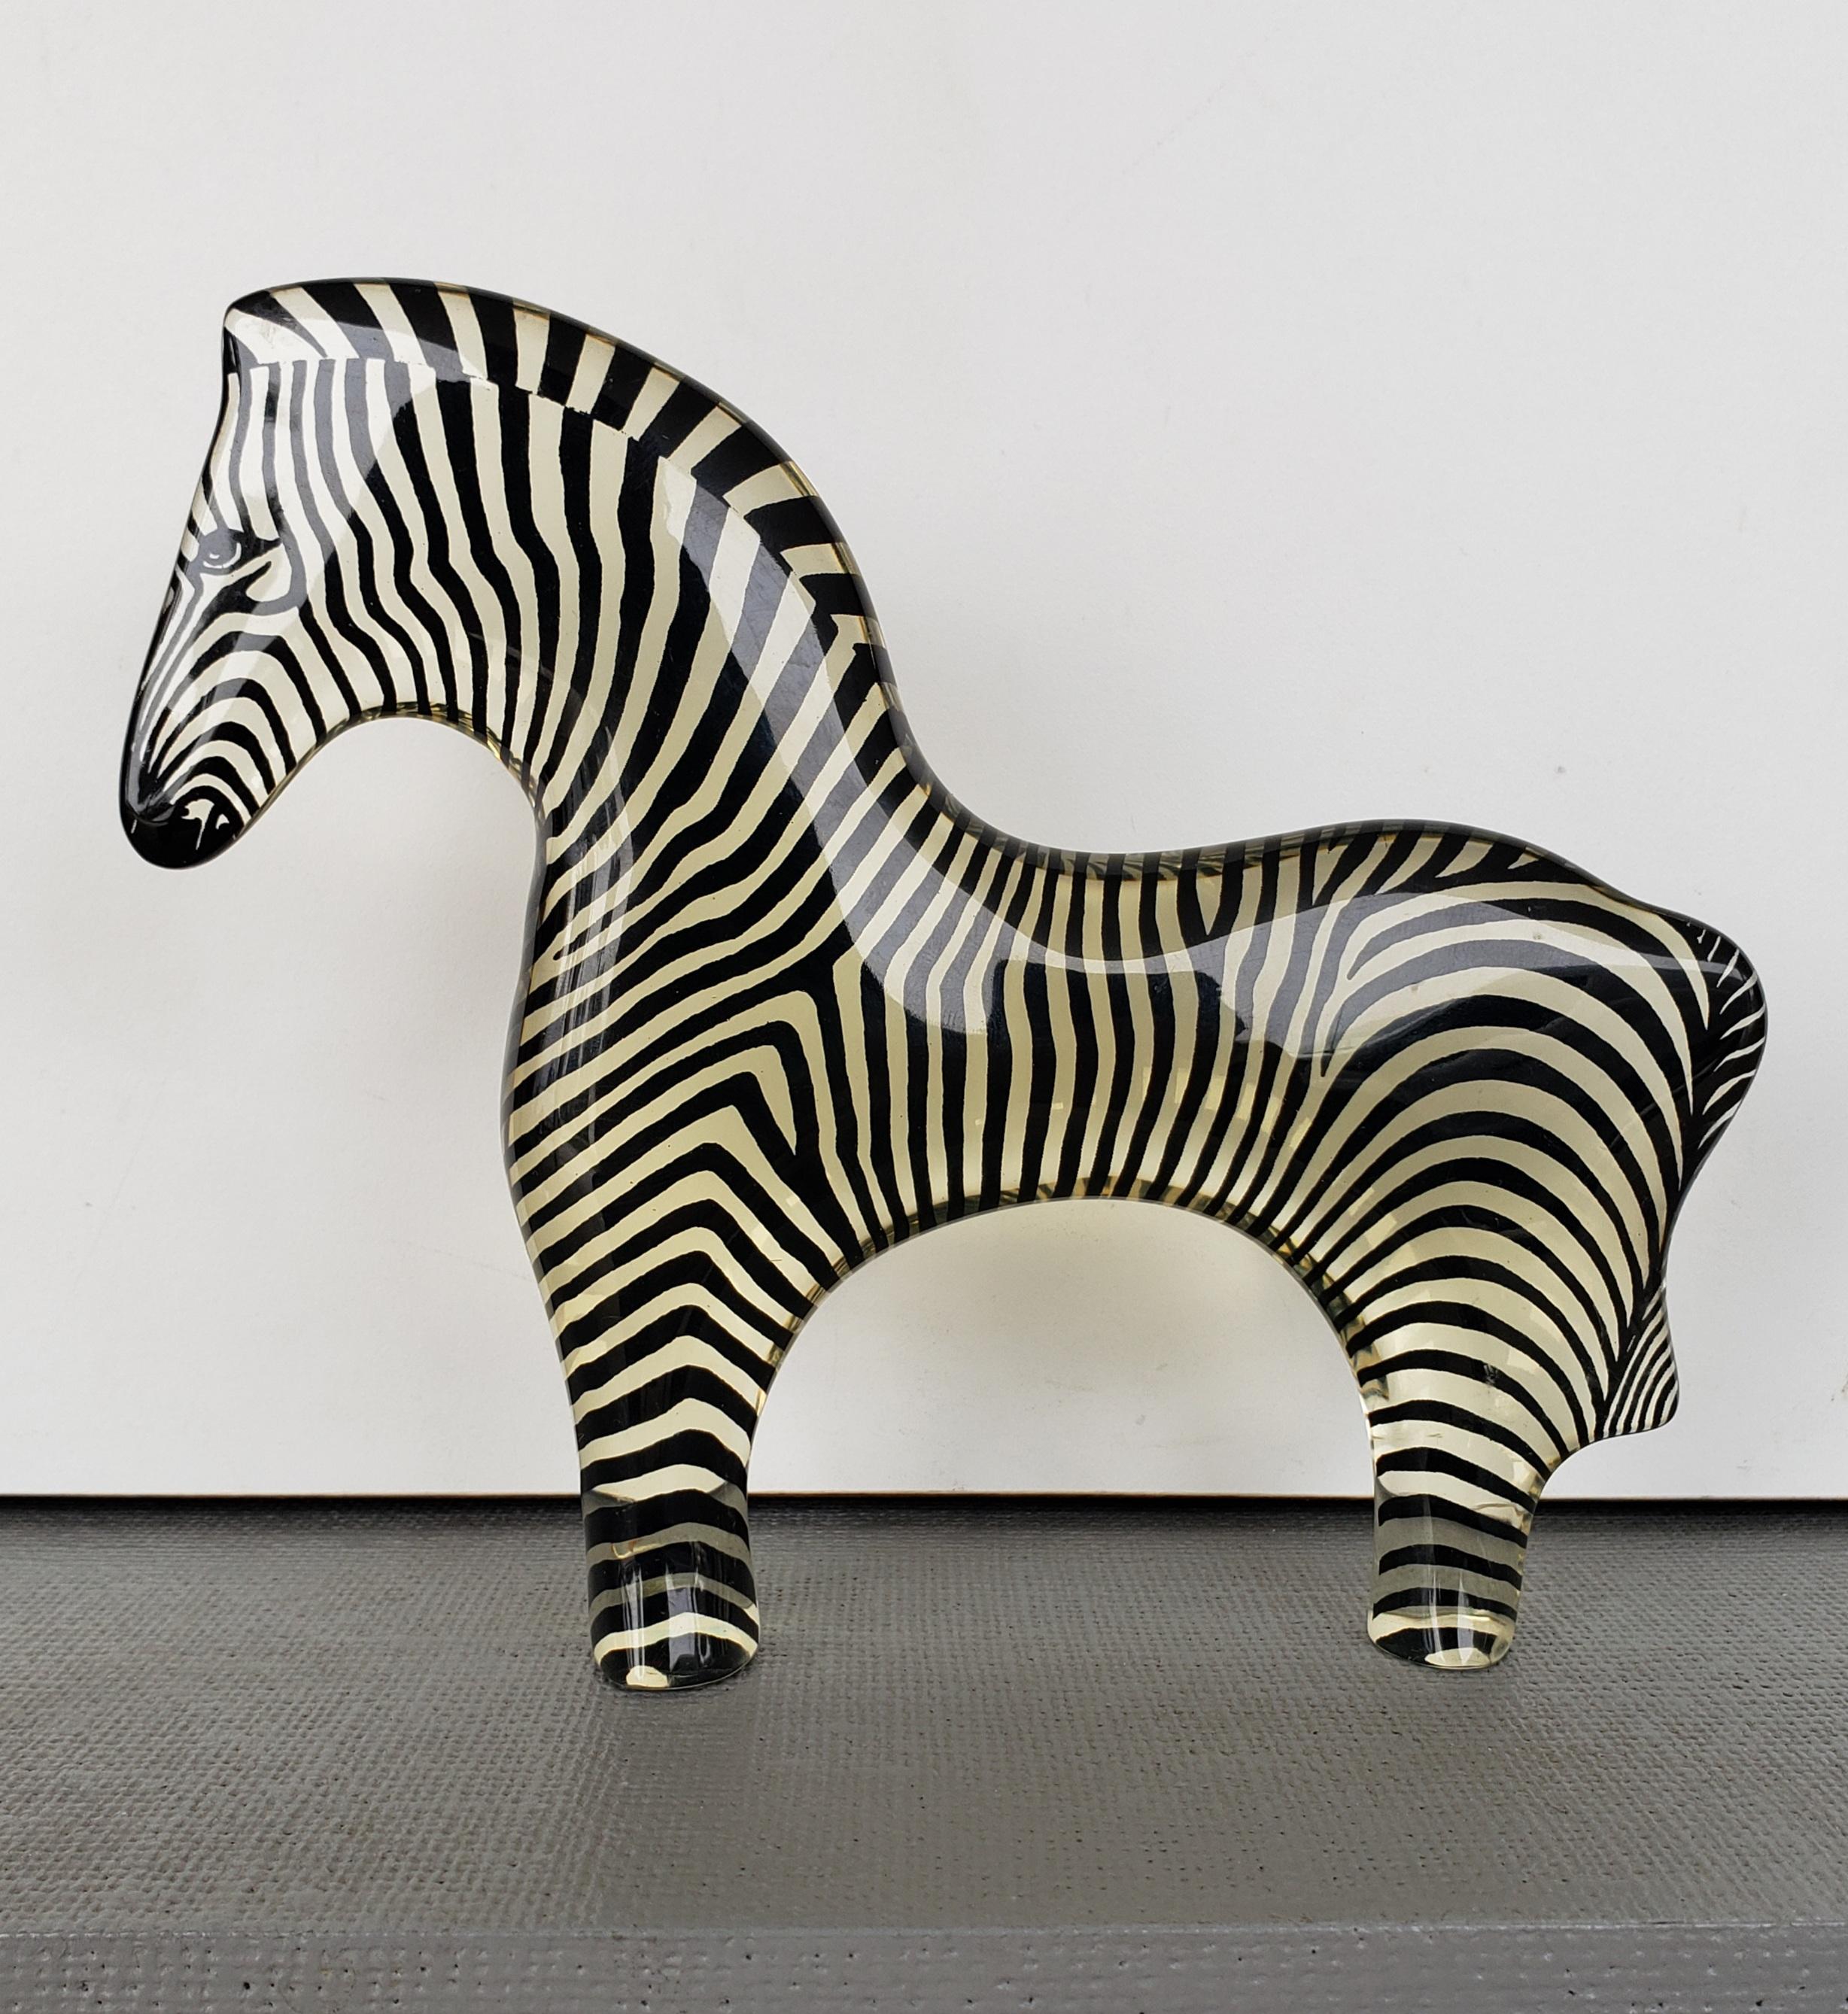 Other Mid 20th century Abraham Palatnik Brazil Lucite Zebra Op Art Animal Sculpture  For Sale